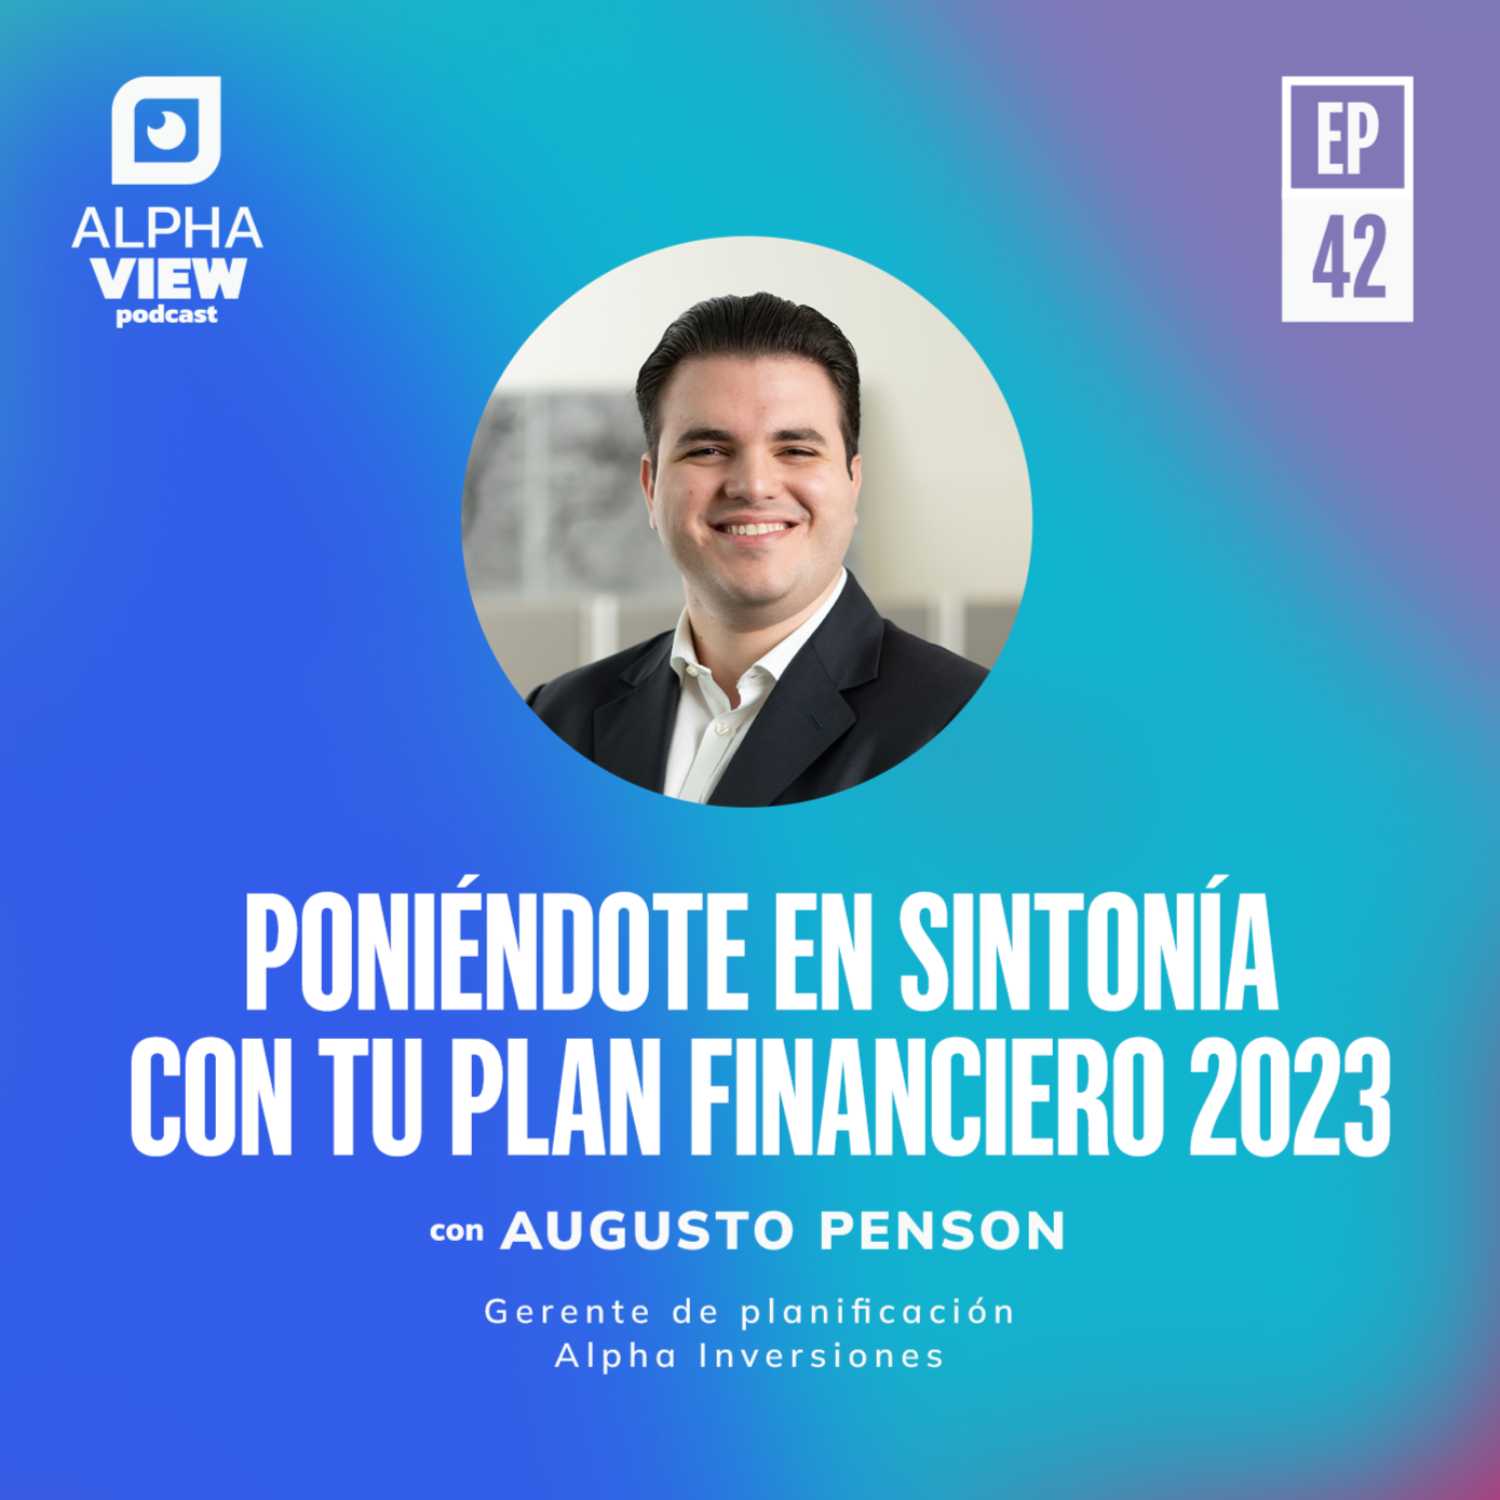 "Poniéndote en sintonía con tu plan financiero 2023" con Augusto Penson